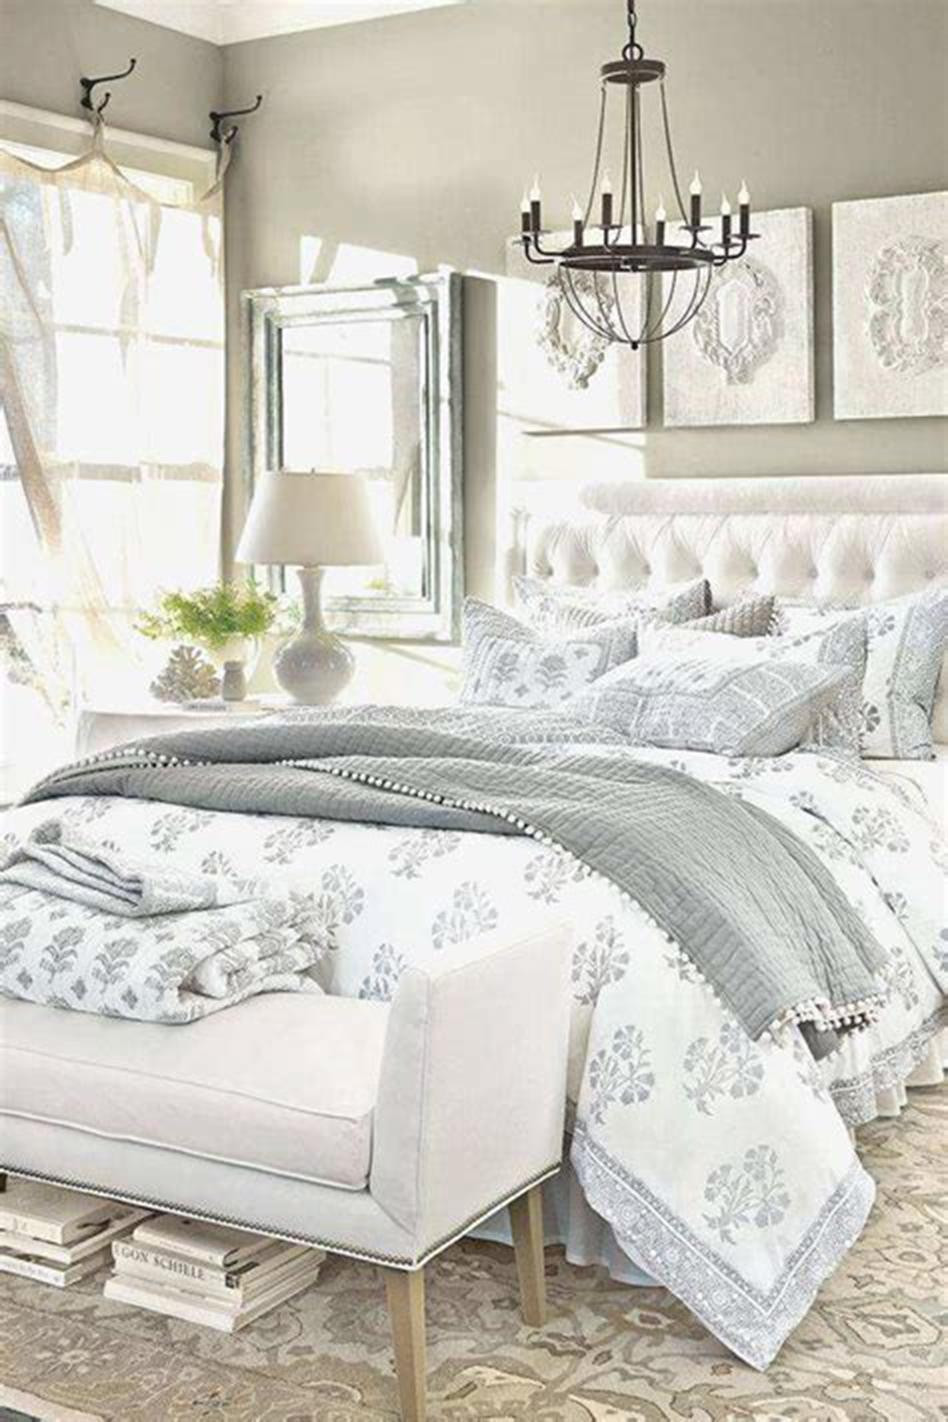 Master Bedroom Comforter Ideas
 45 Beautiful Master Bedroom Bedding Ideas 2019 32